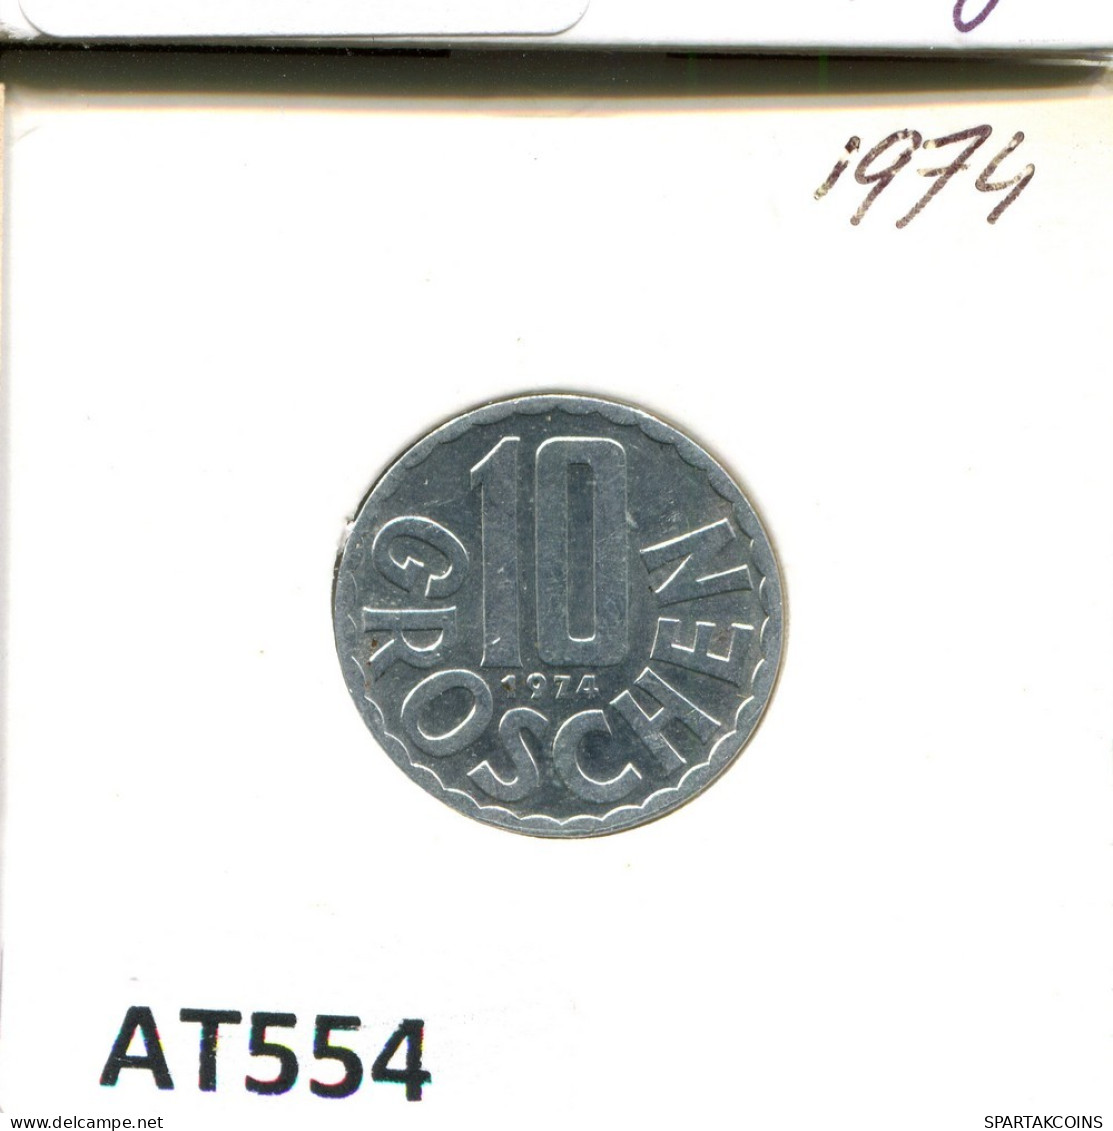 10 GROSCHEN 1974 AUSTRIA Coin #AT554.U.A - Autriche